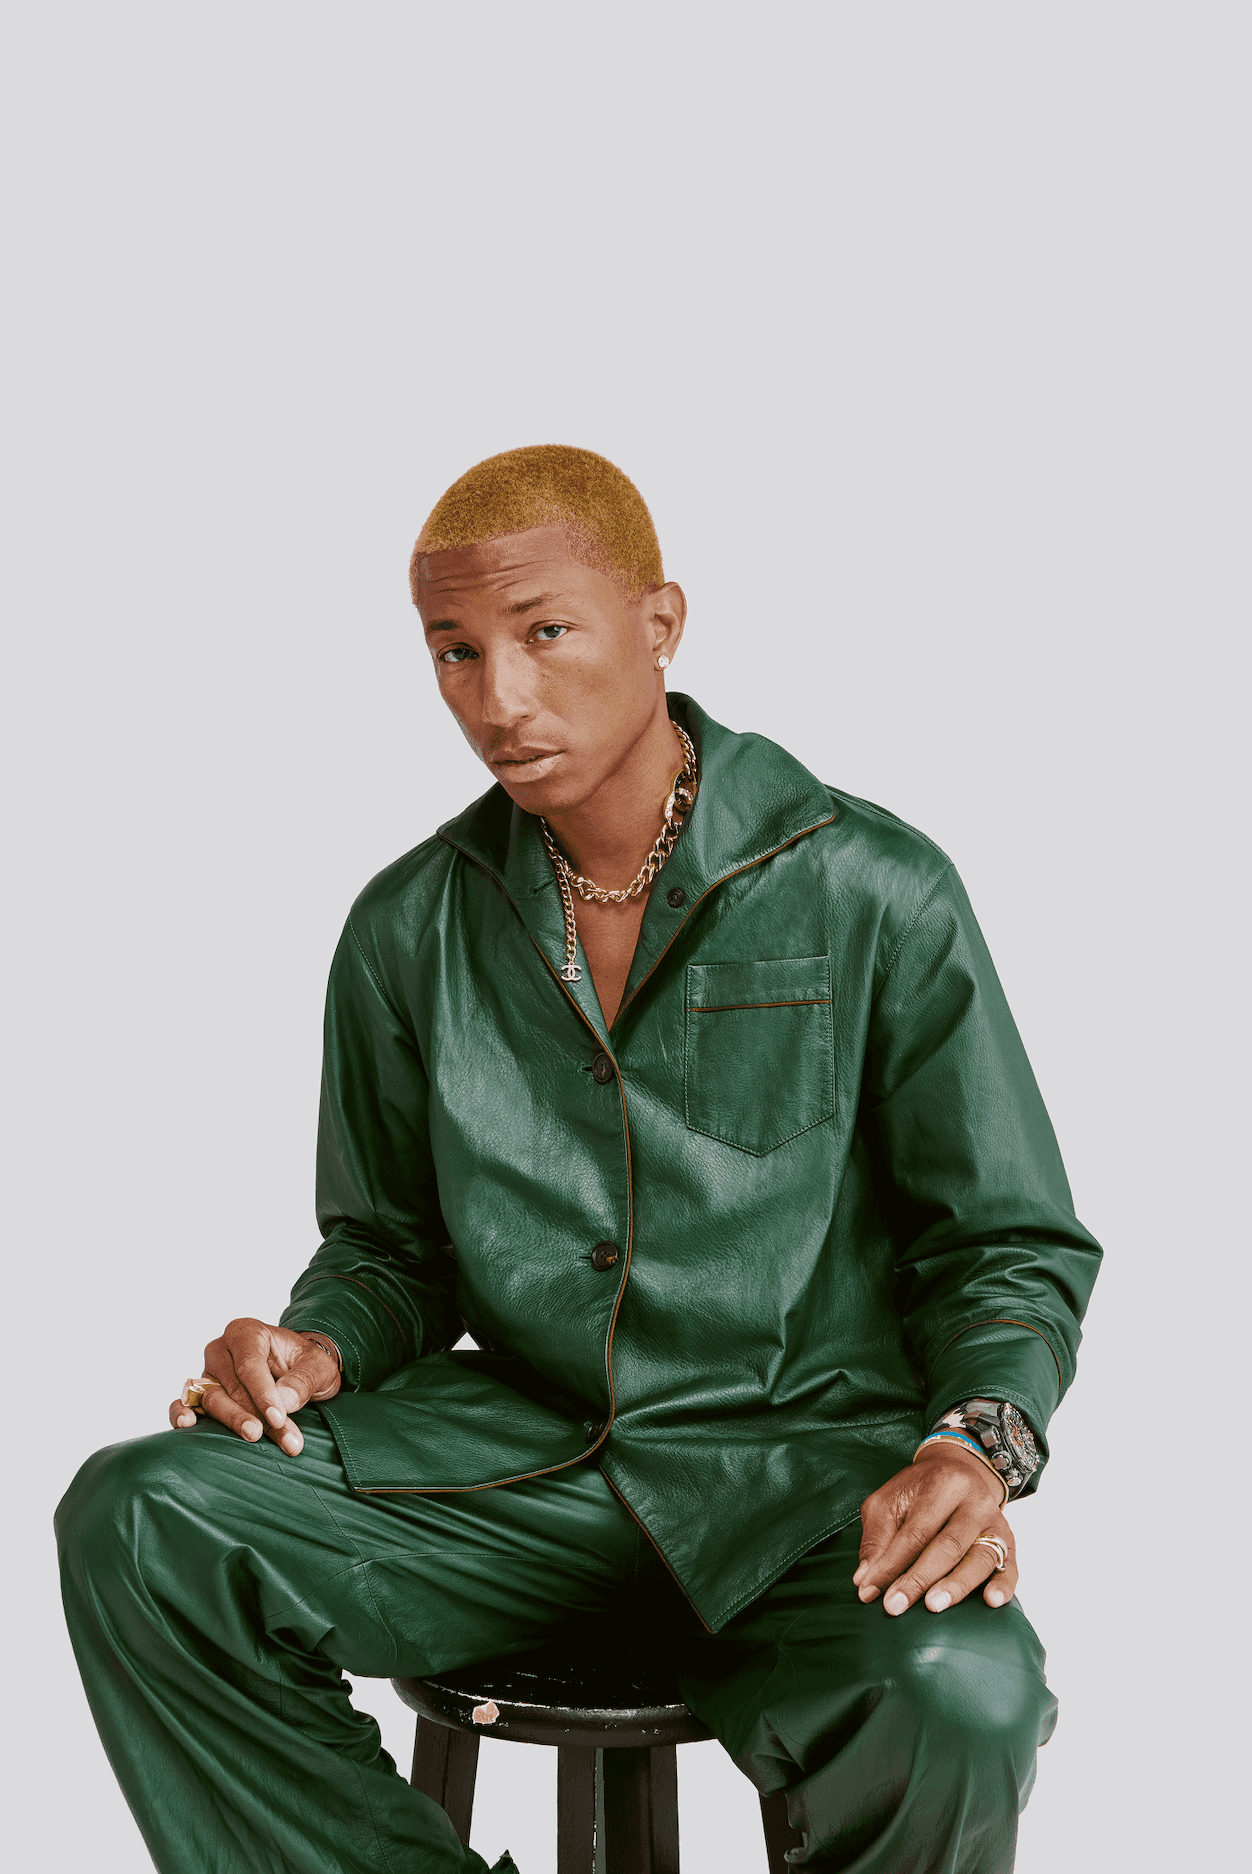 GQ Pharrell - MICAIAH CARTER - 298